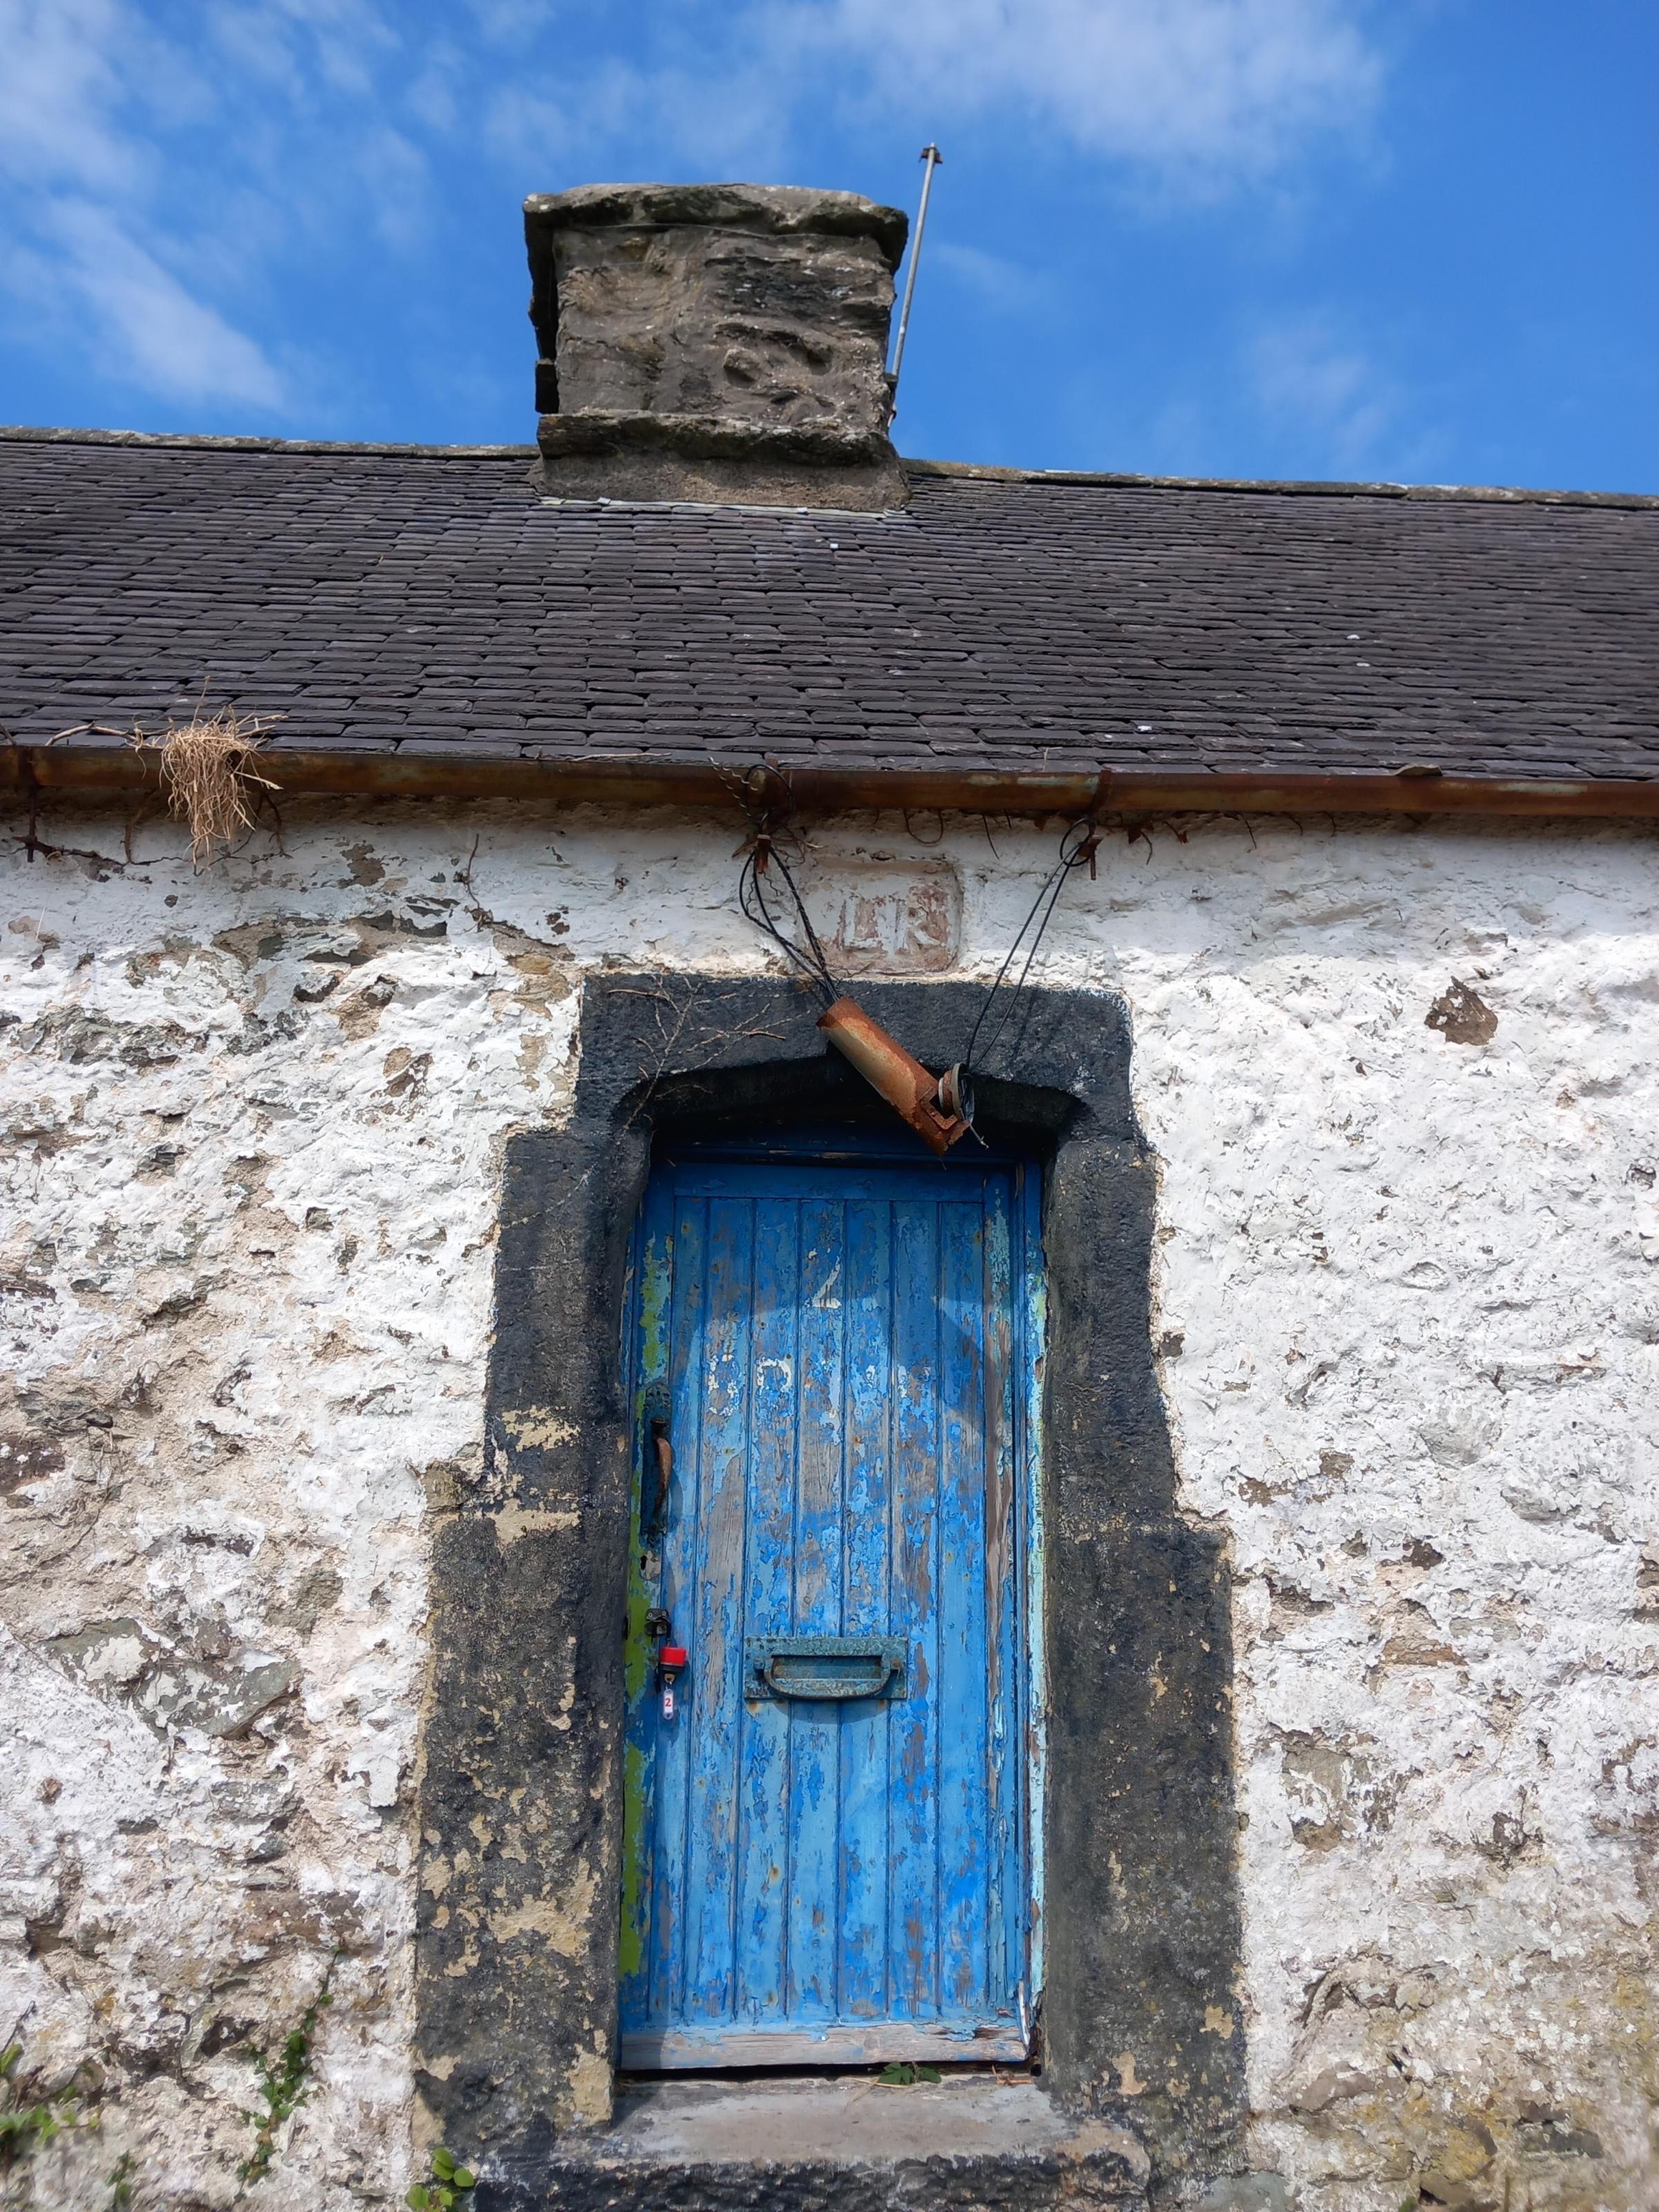  No 2 Penmynydd Almshouses (Image Dale Spridgeon)